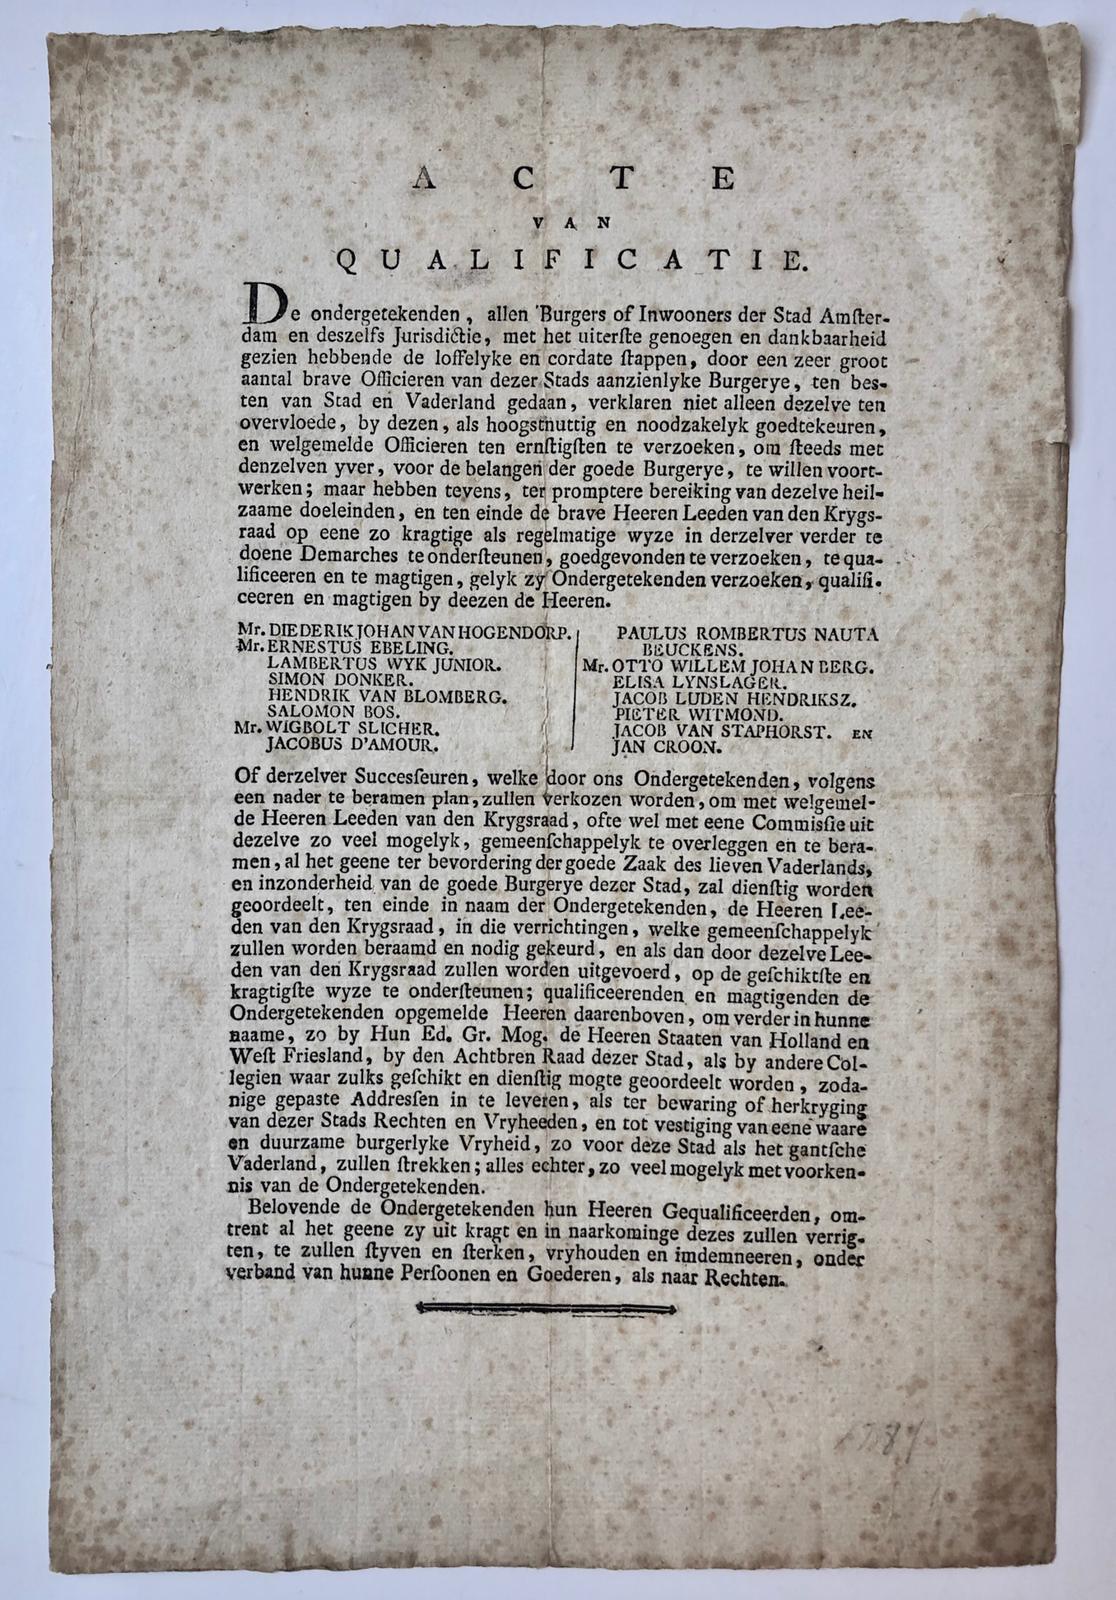 AMSTERDAM IN 1787 - [Printed publication [1787]] Acte van qualificatie dd. Amsterdam [1787], 1 blad folio, gedrukt.